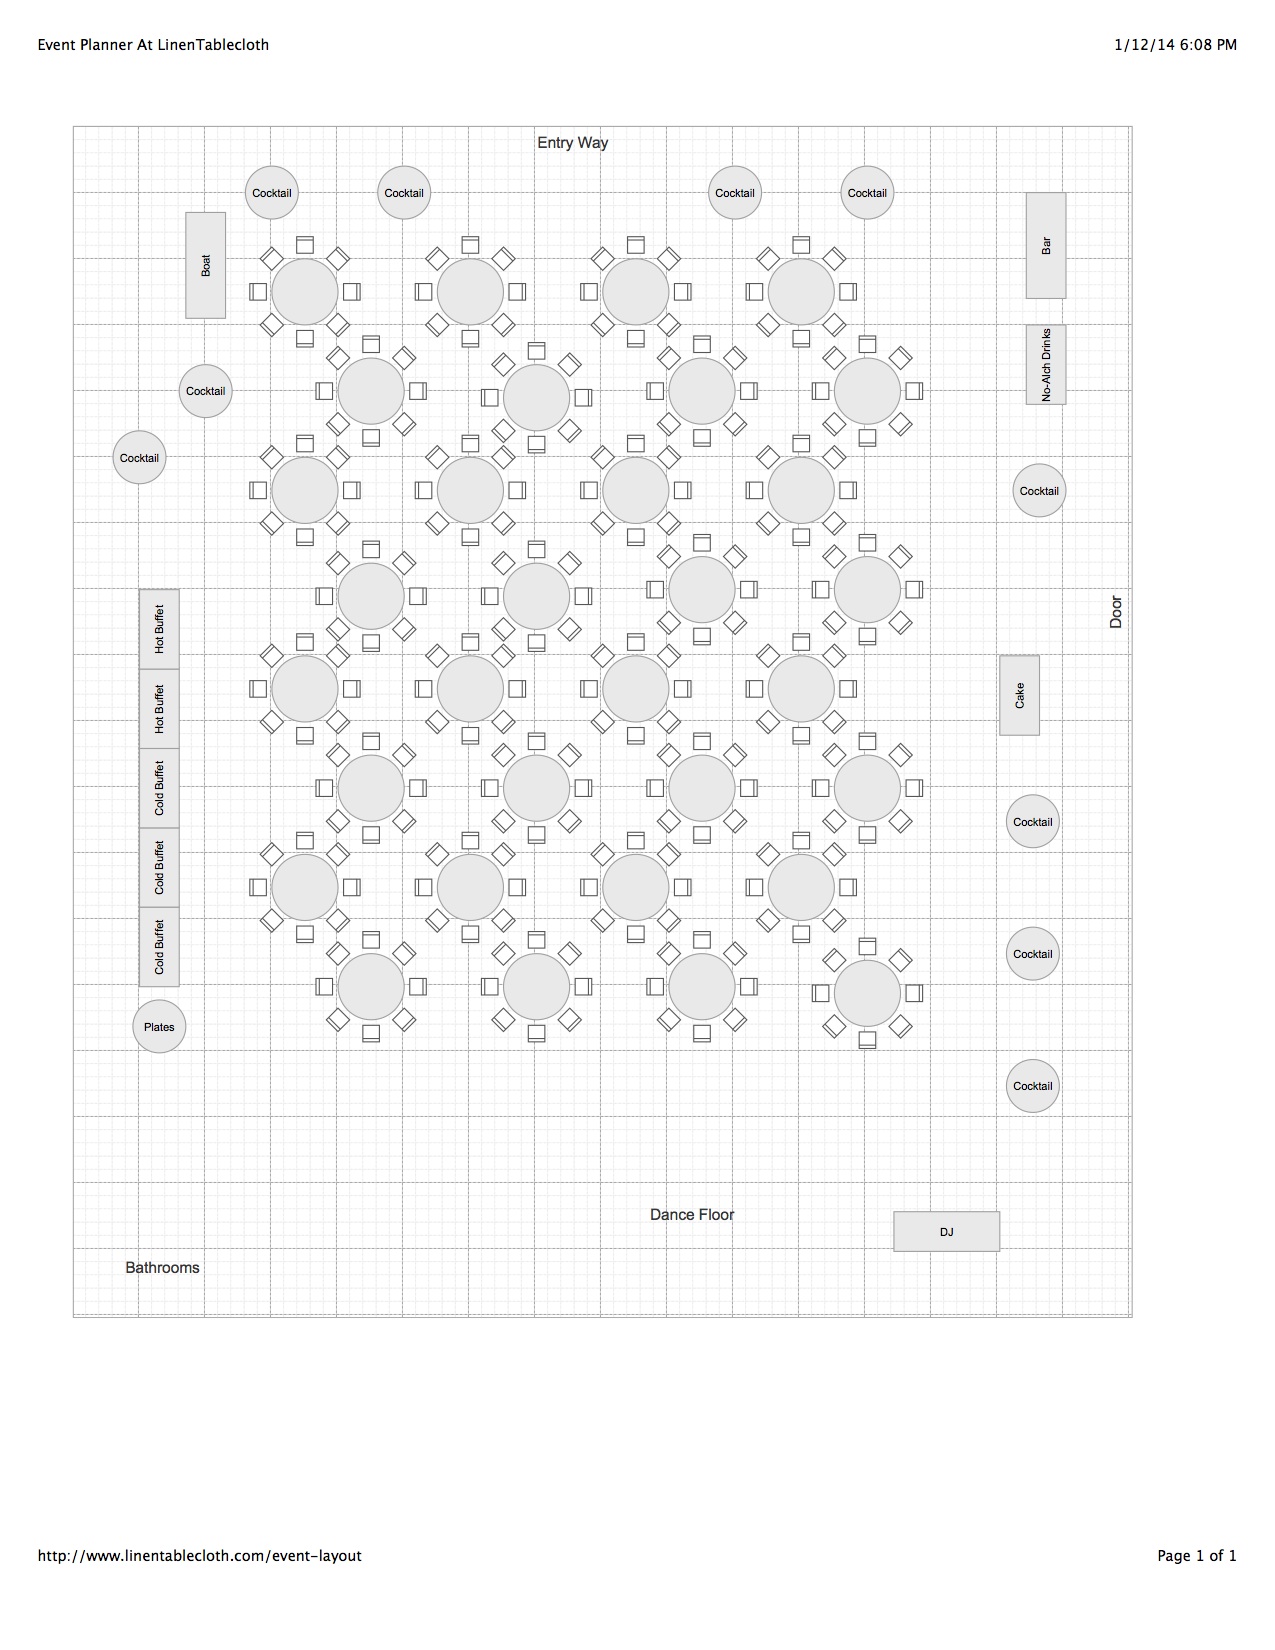 Event Planner Layout At LinenTablecloth.com | bexbernard.com